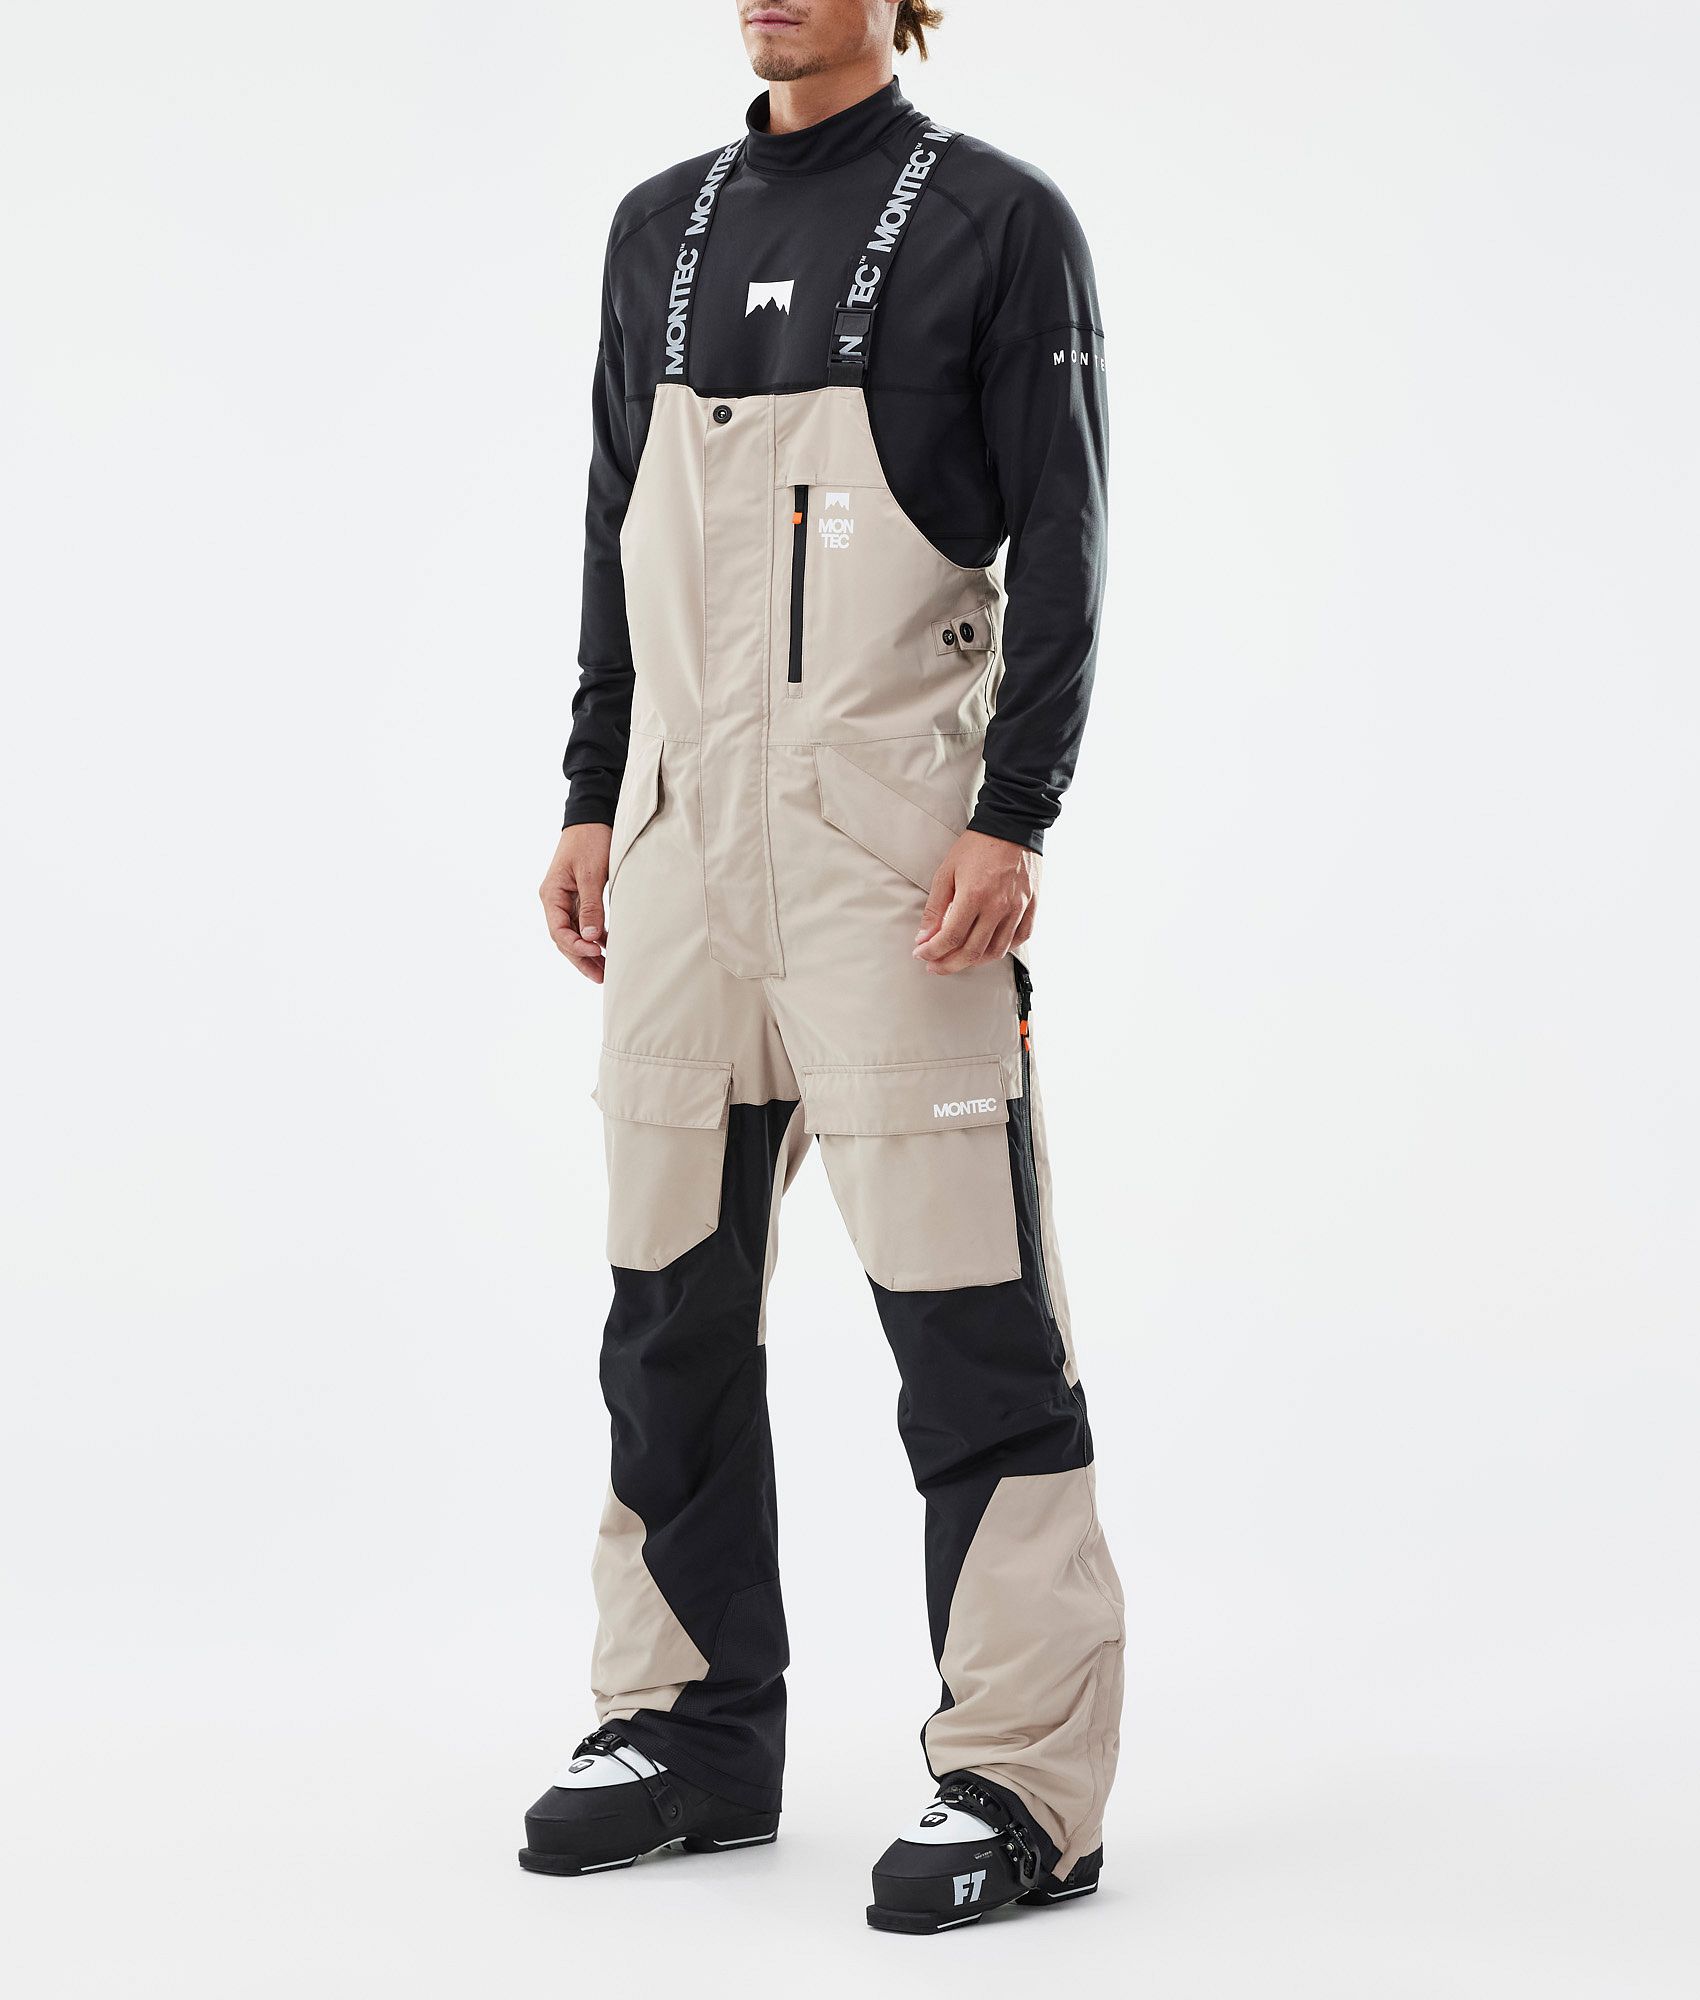 Men's Evader Ski Pants | Ski pants | Rossignol